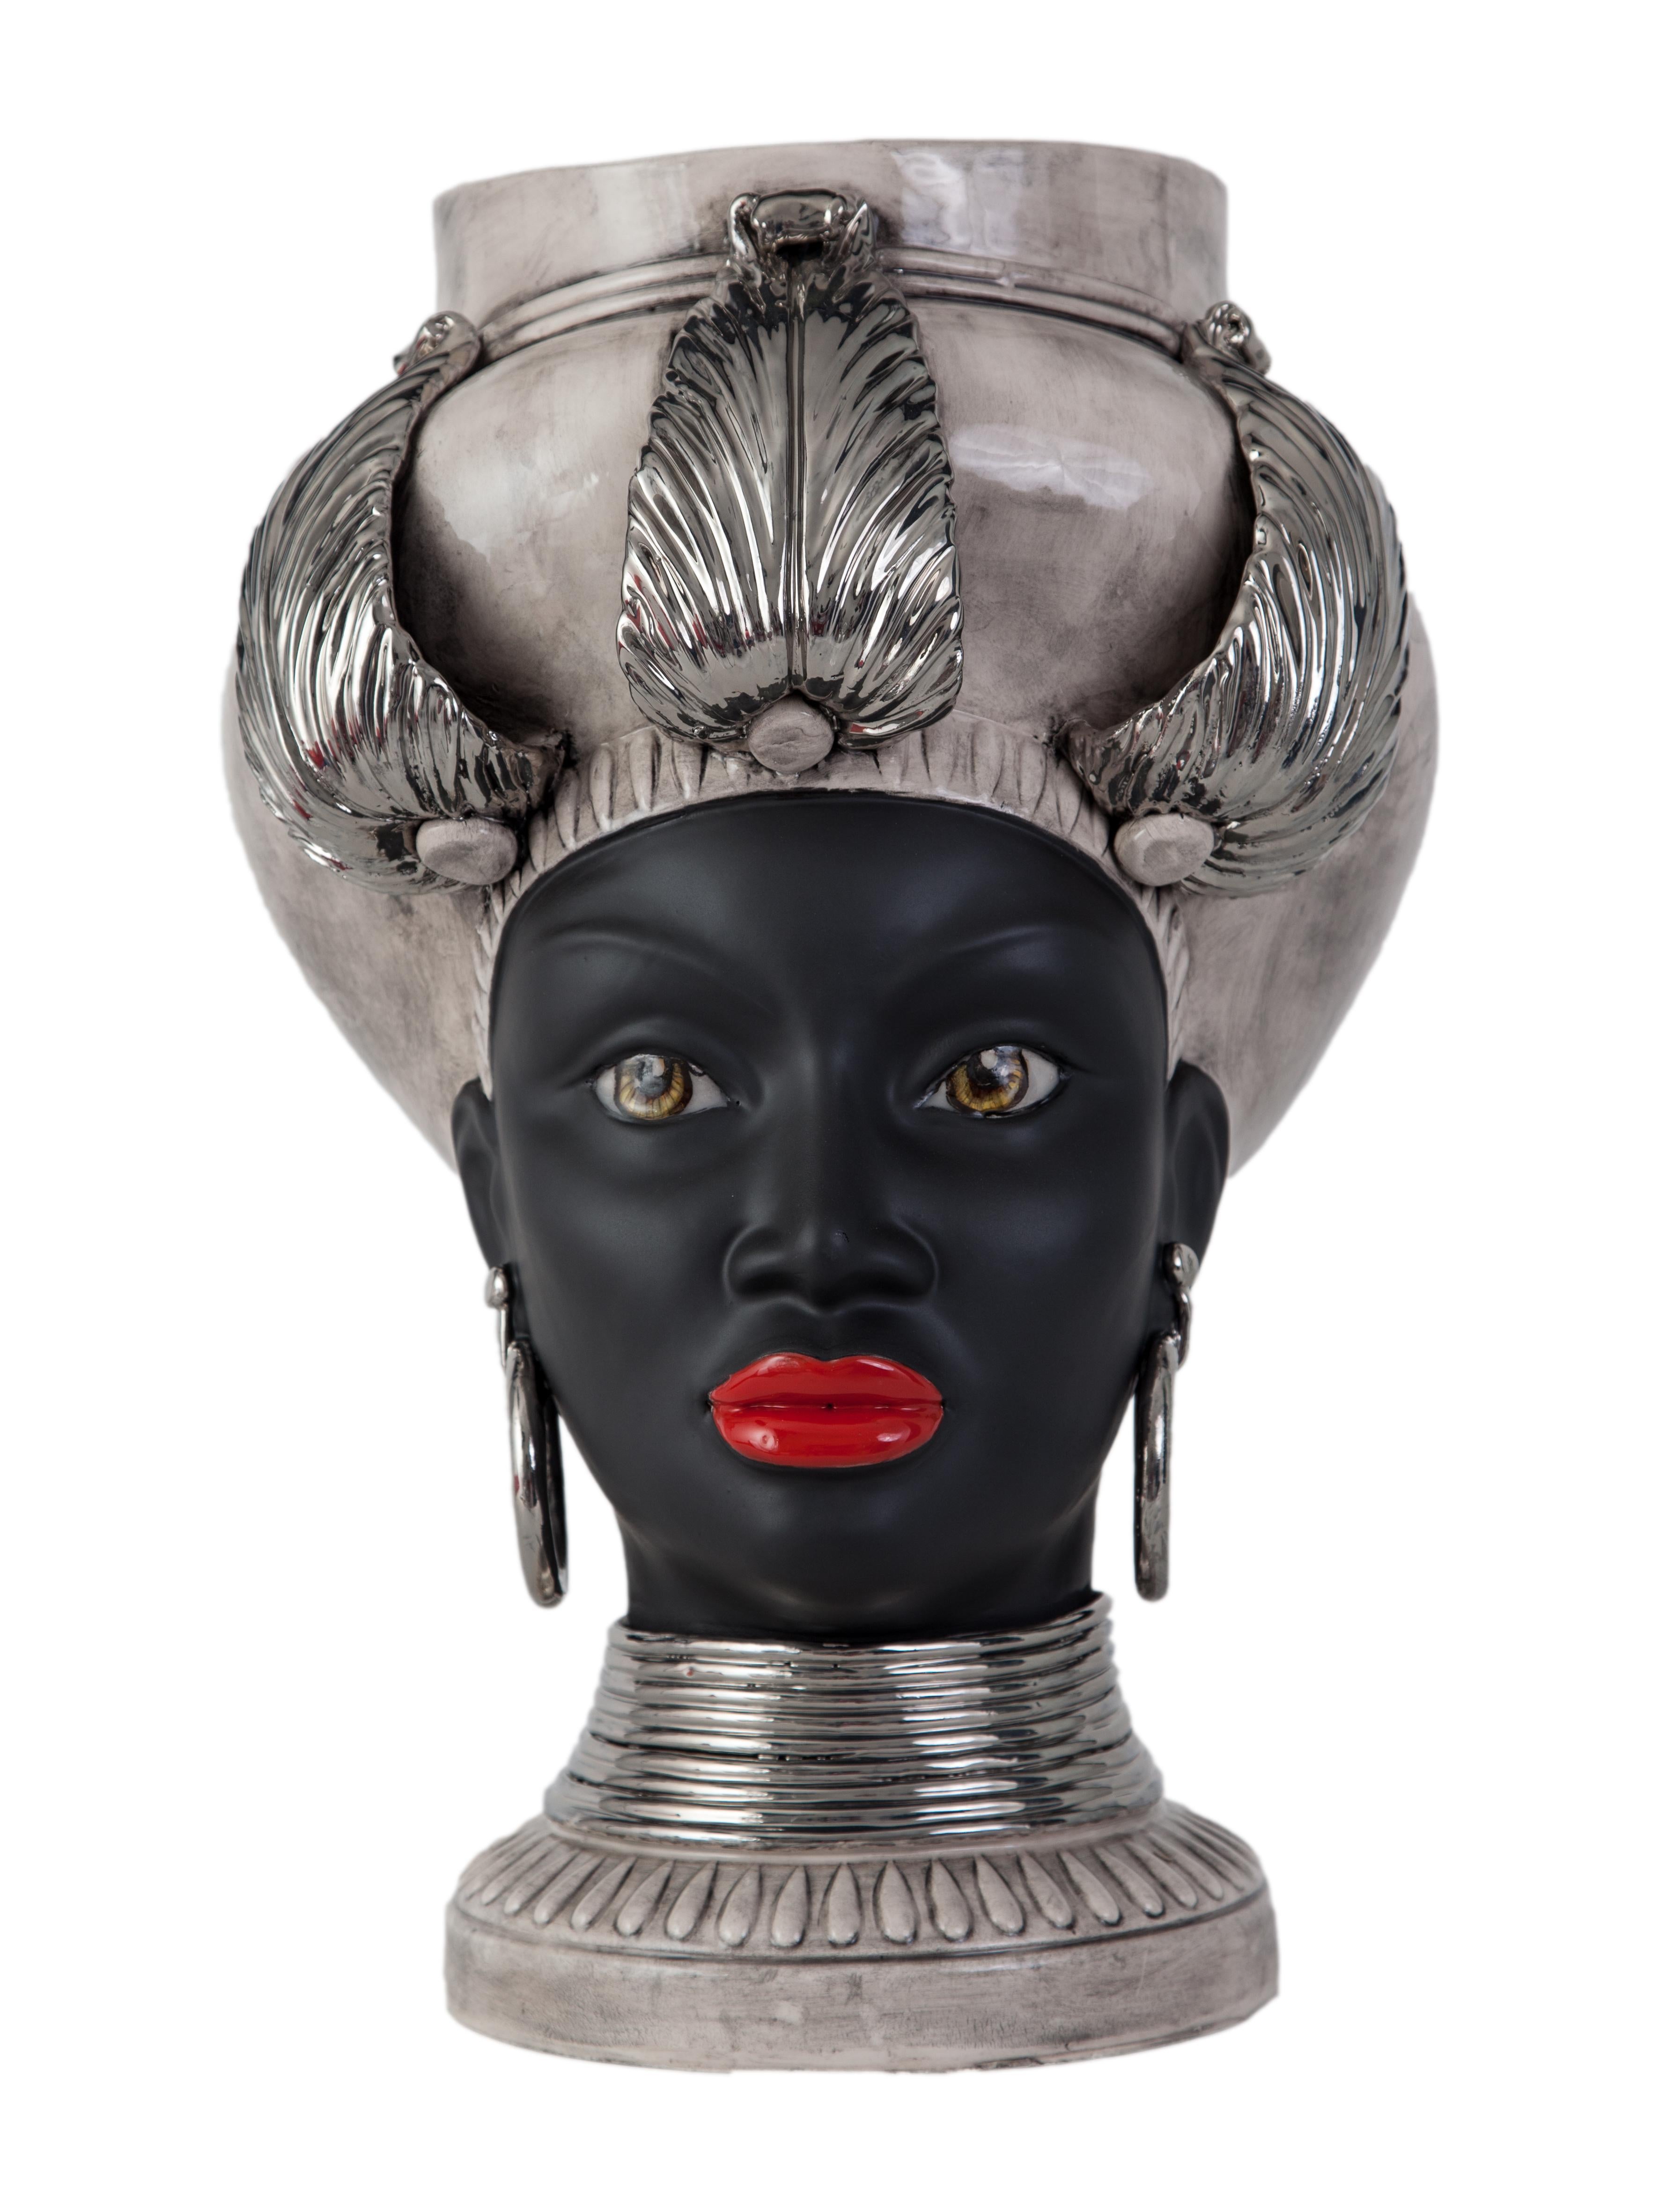 ISIDE I11, Moorish Head, Handmade in Sicily, 2021, Centerpiece, Size L. Vase. For Sale 11